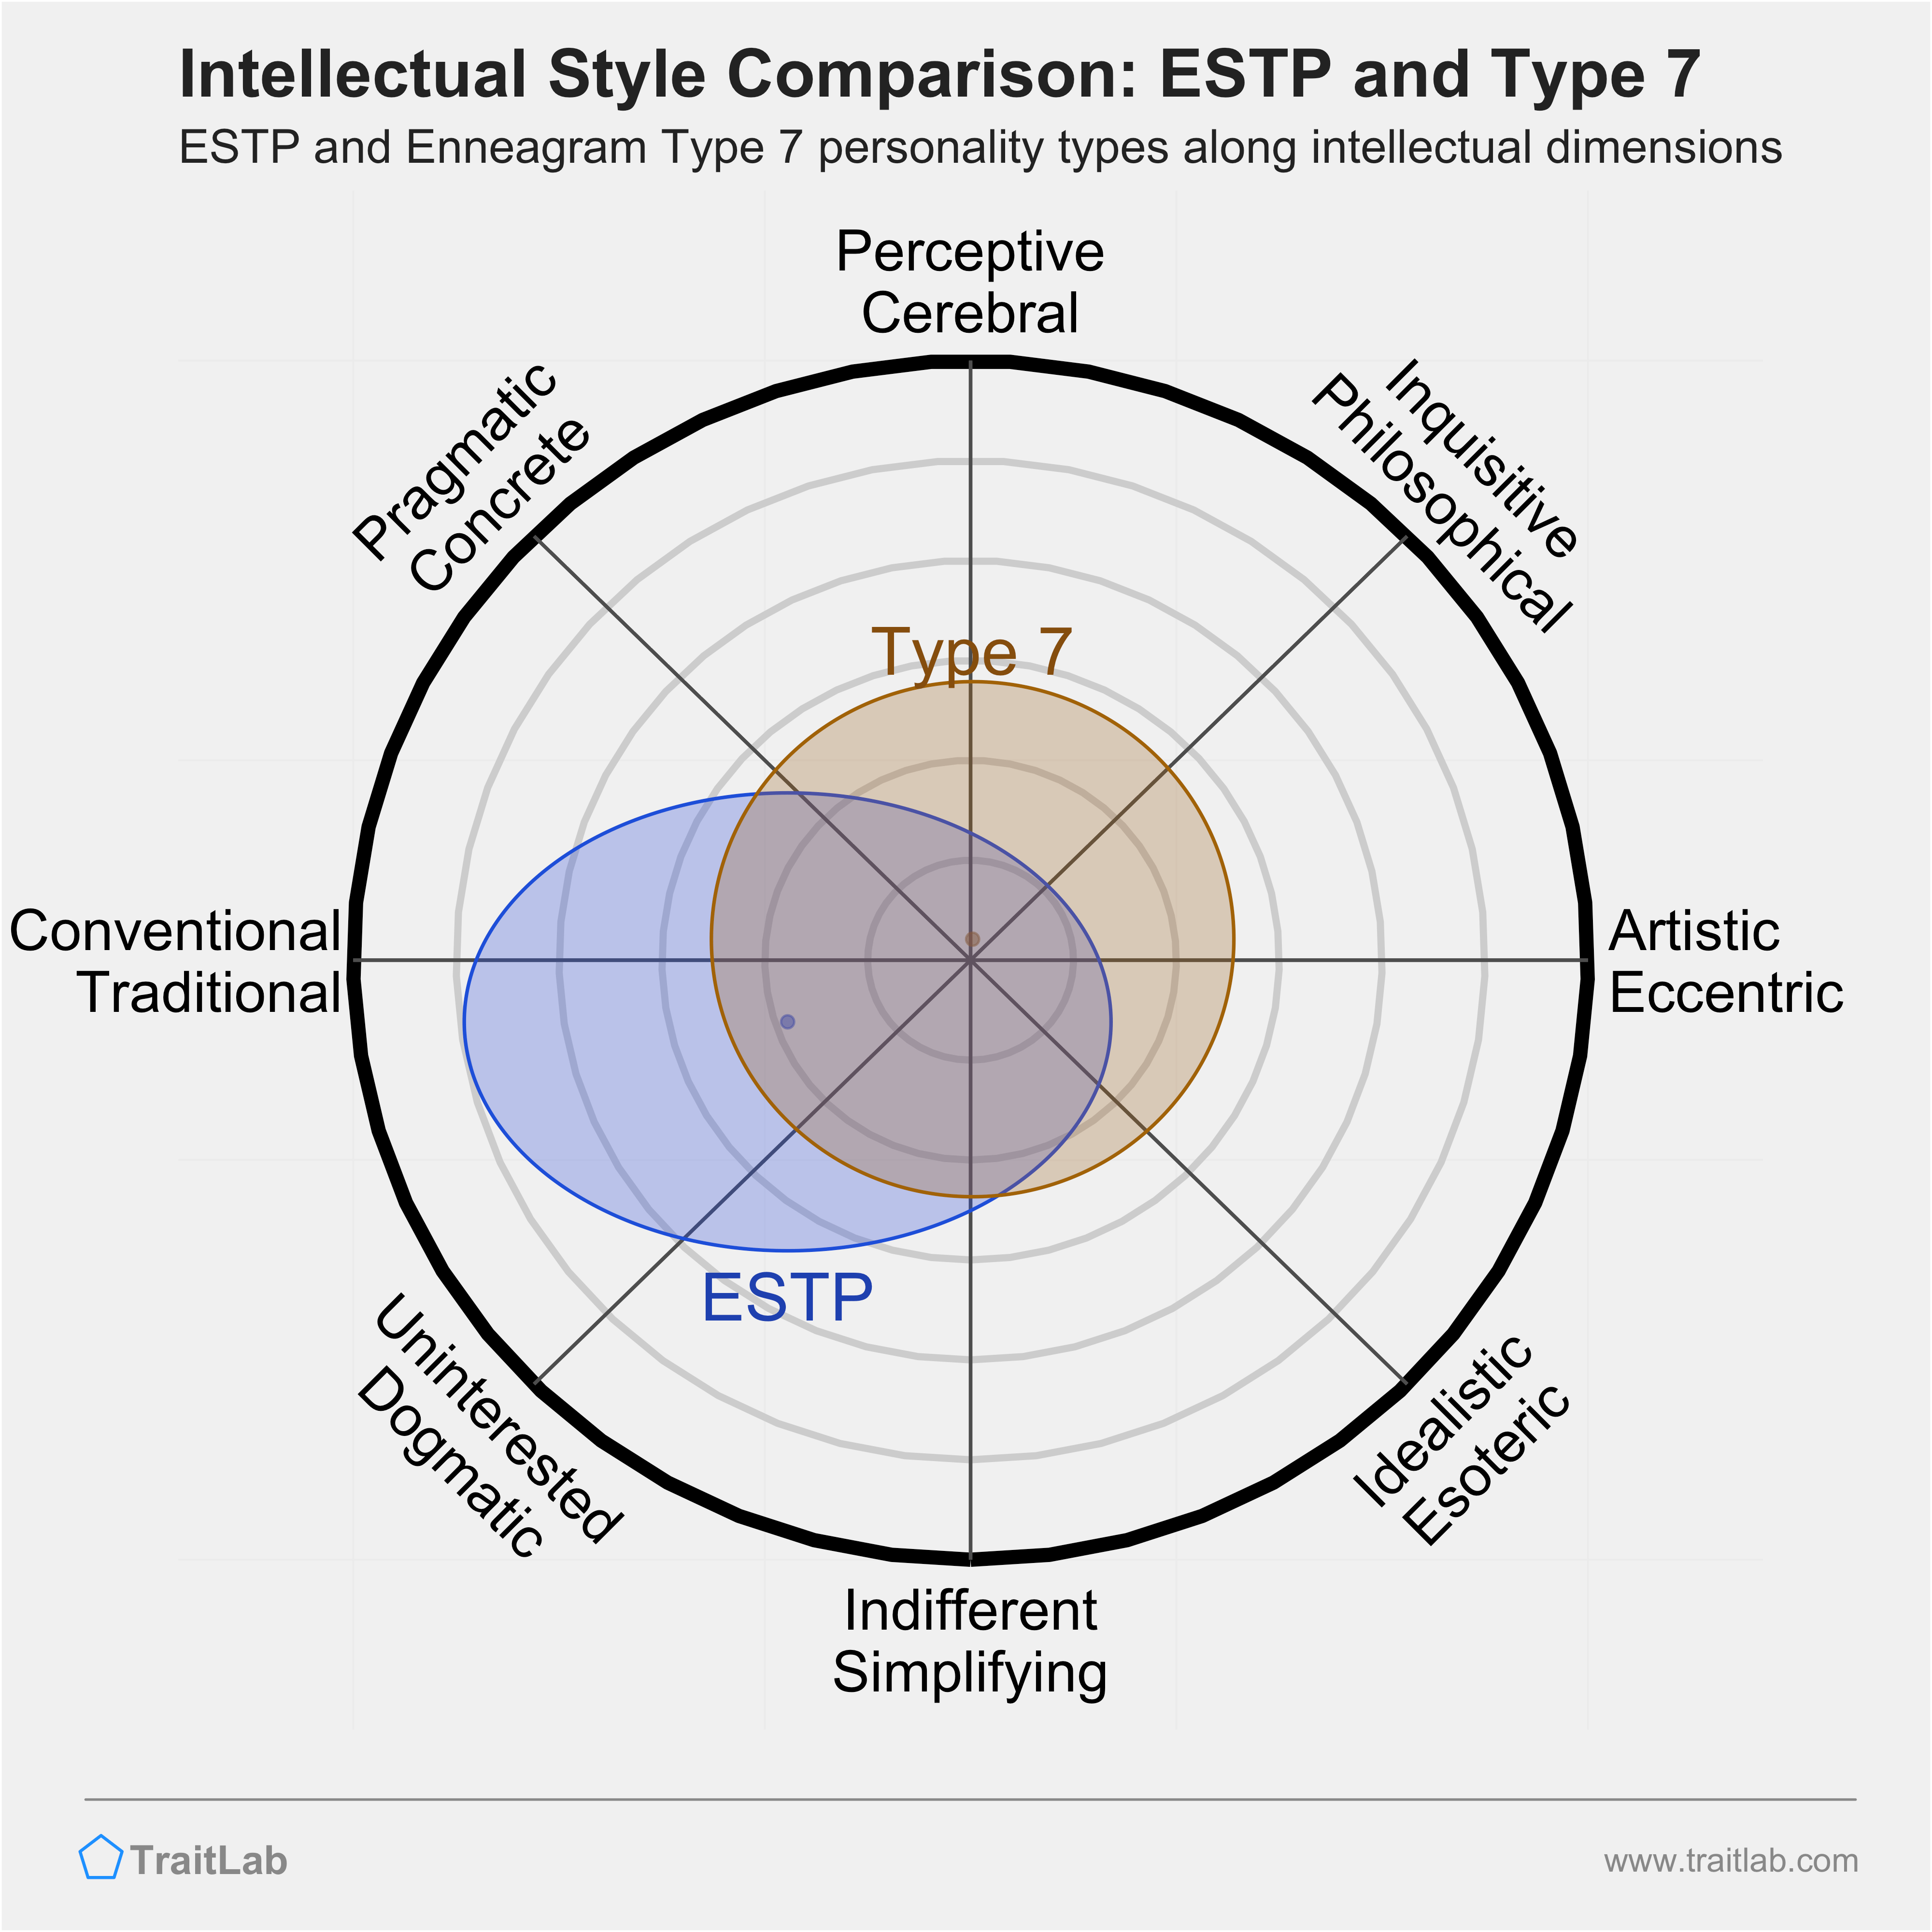 ESTP and Type 7 comparison across intellectual dimensions